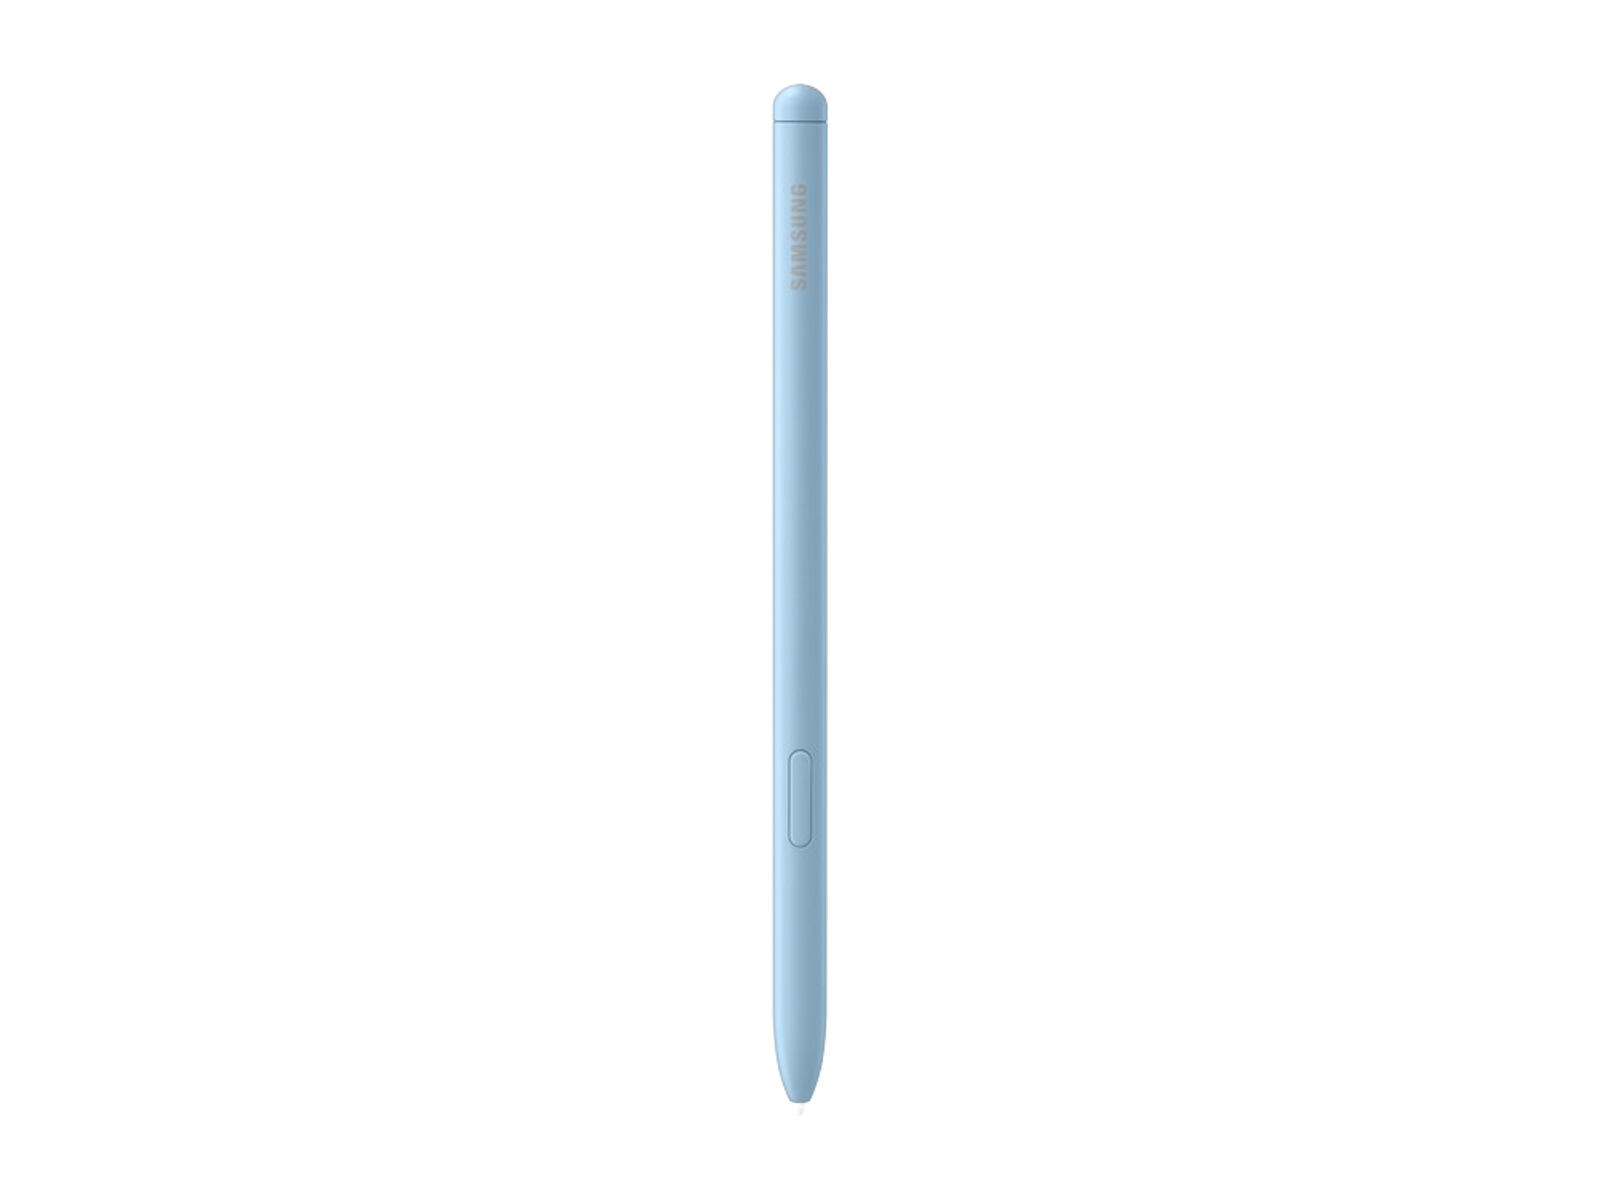 SAMSUNG S Pen Galaxy (blue) Lite darkgray S6 Standard Tab